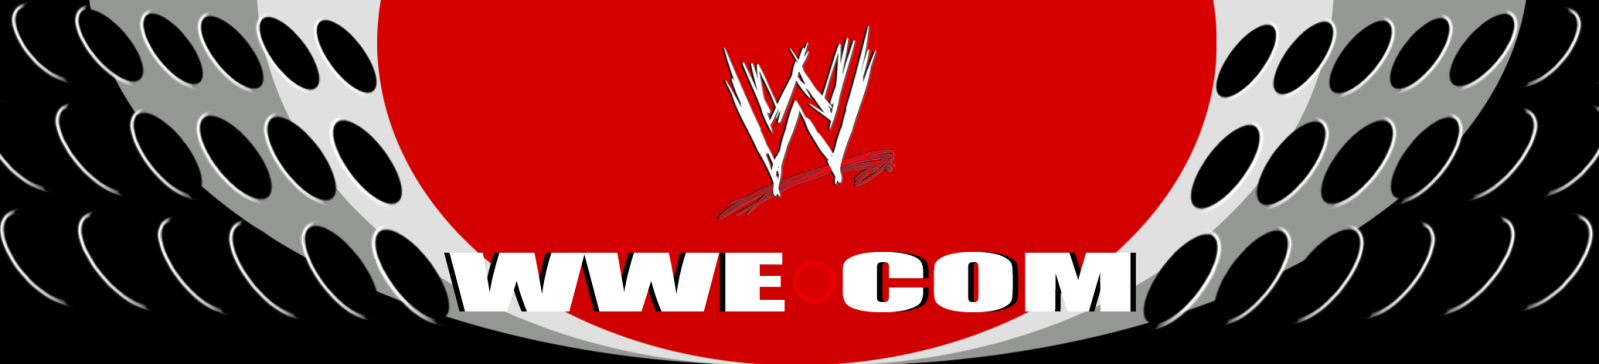 Wwe.com Logo - NEW RAW HD SKIRT!!! (WEST) | Wrestlingfigs.com WWE Figure Forums